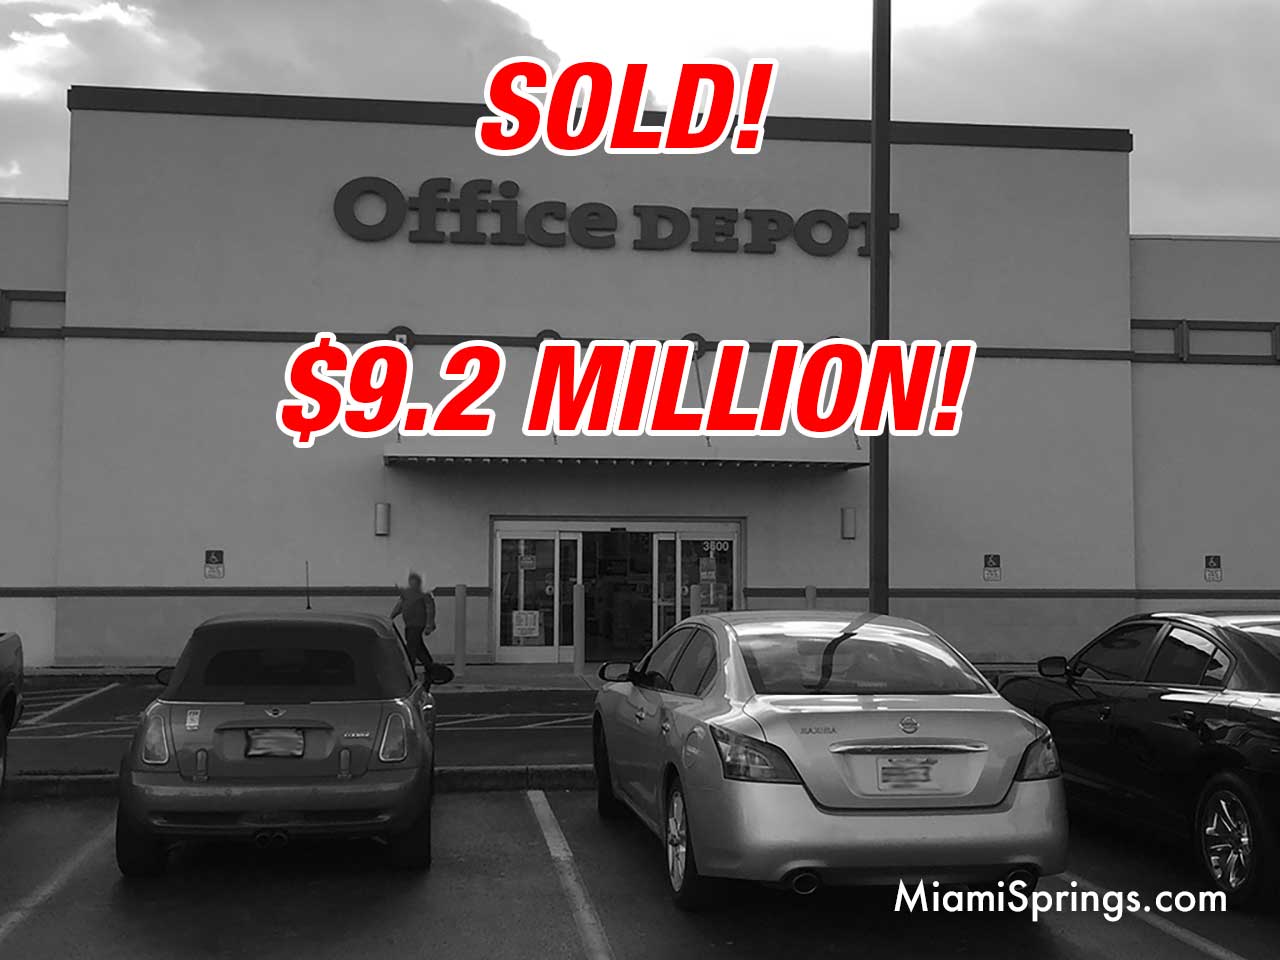 Office Depot sold for $9.2 Million